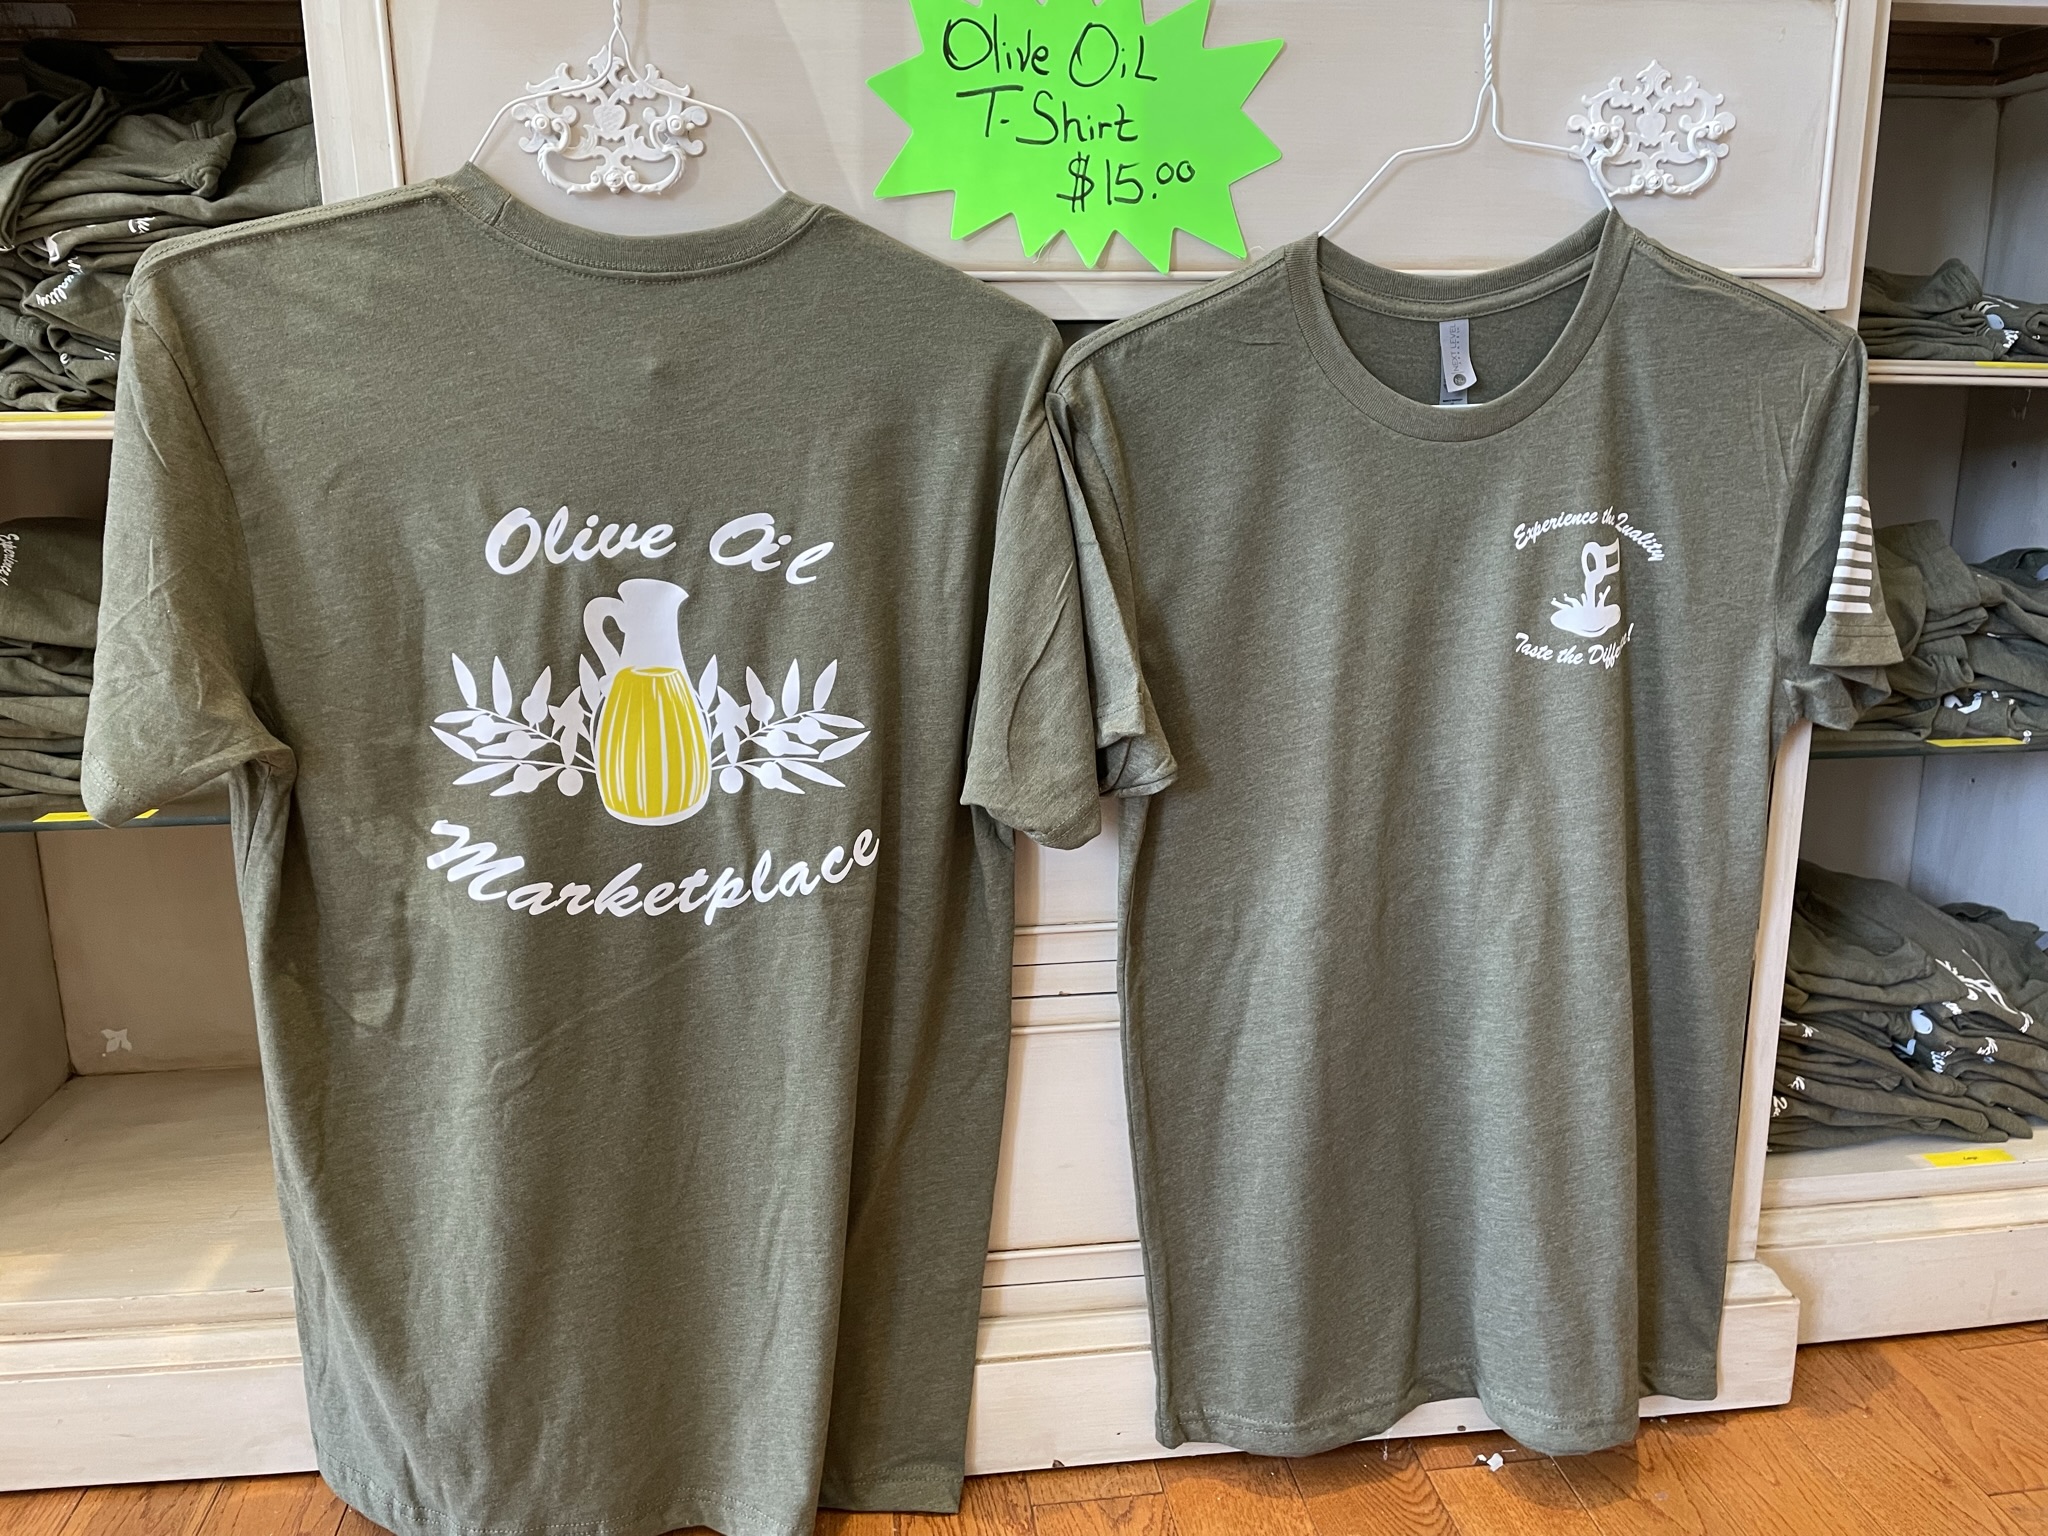 Olive Oil Marketplace T-Shirts | Oil Marketplace